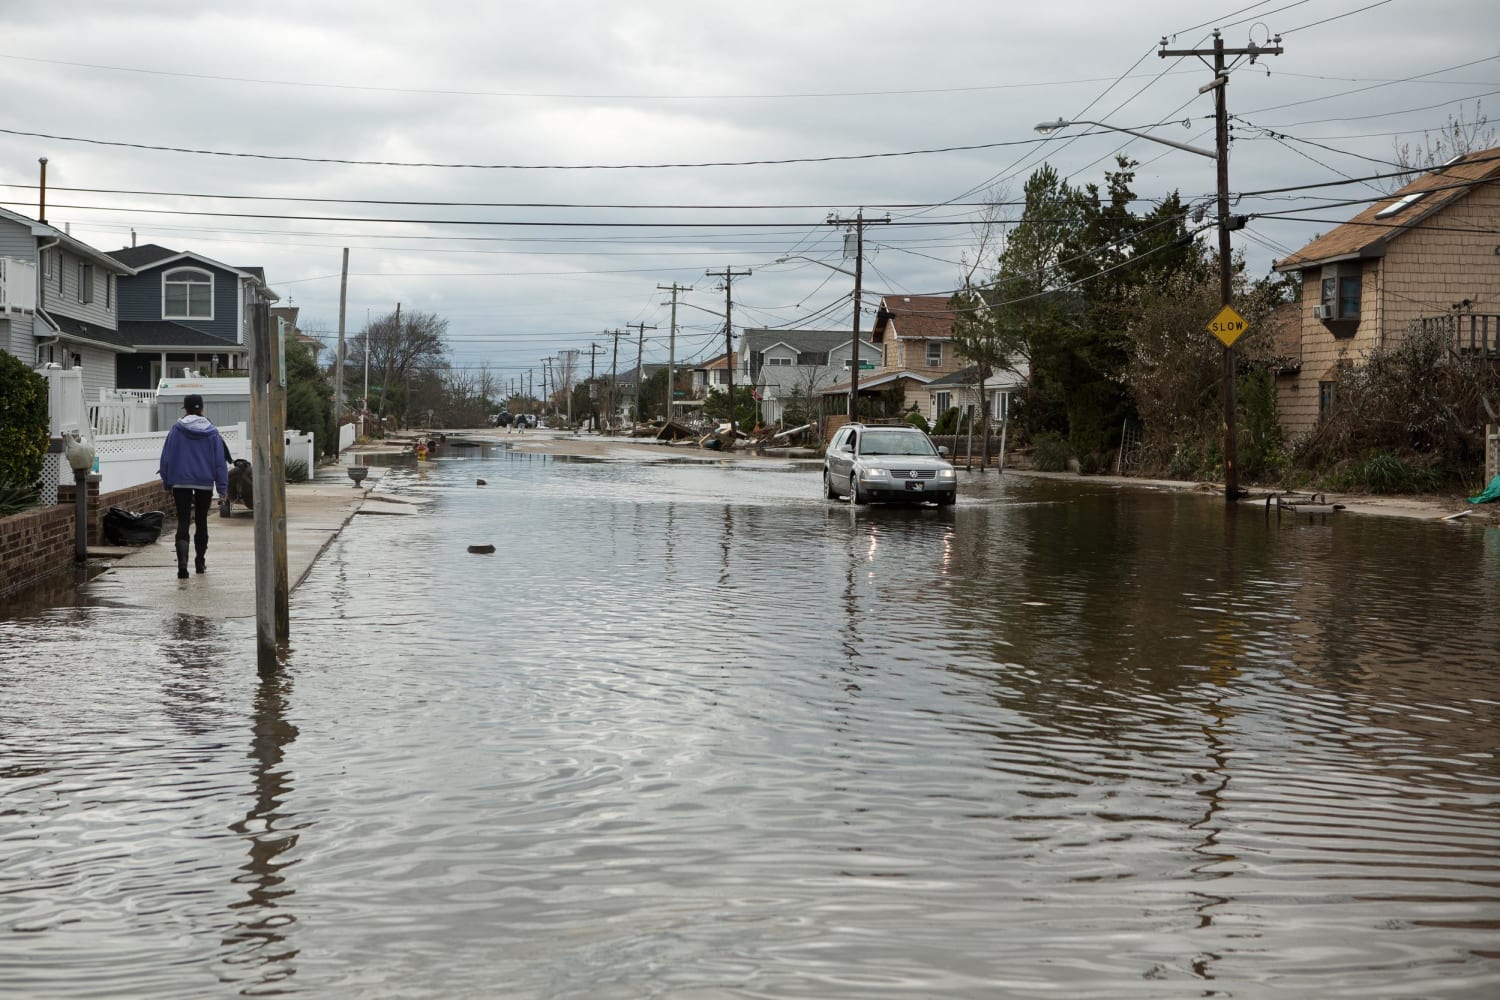 House OKs Bill to Undo Flood Insurance Premium Hikes - NBC News.com